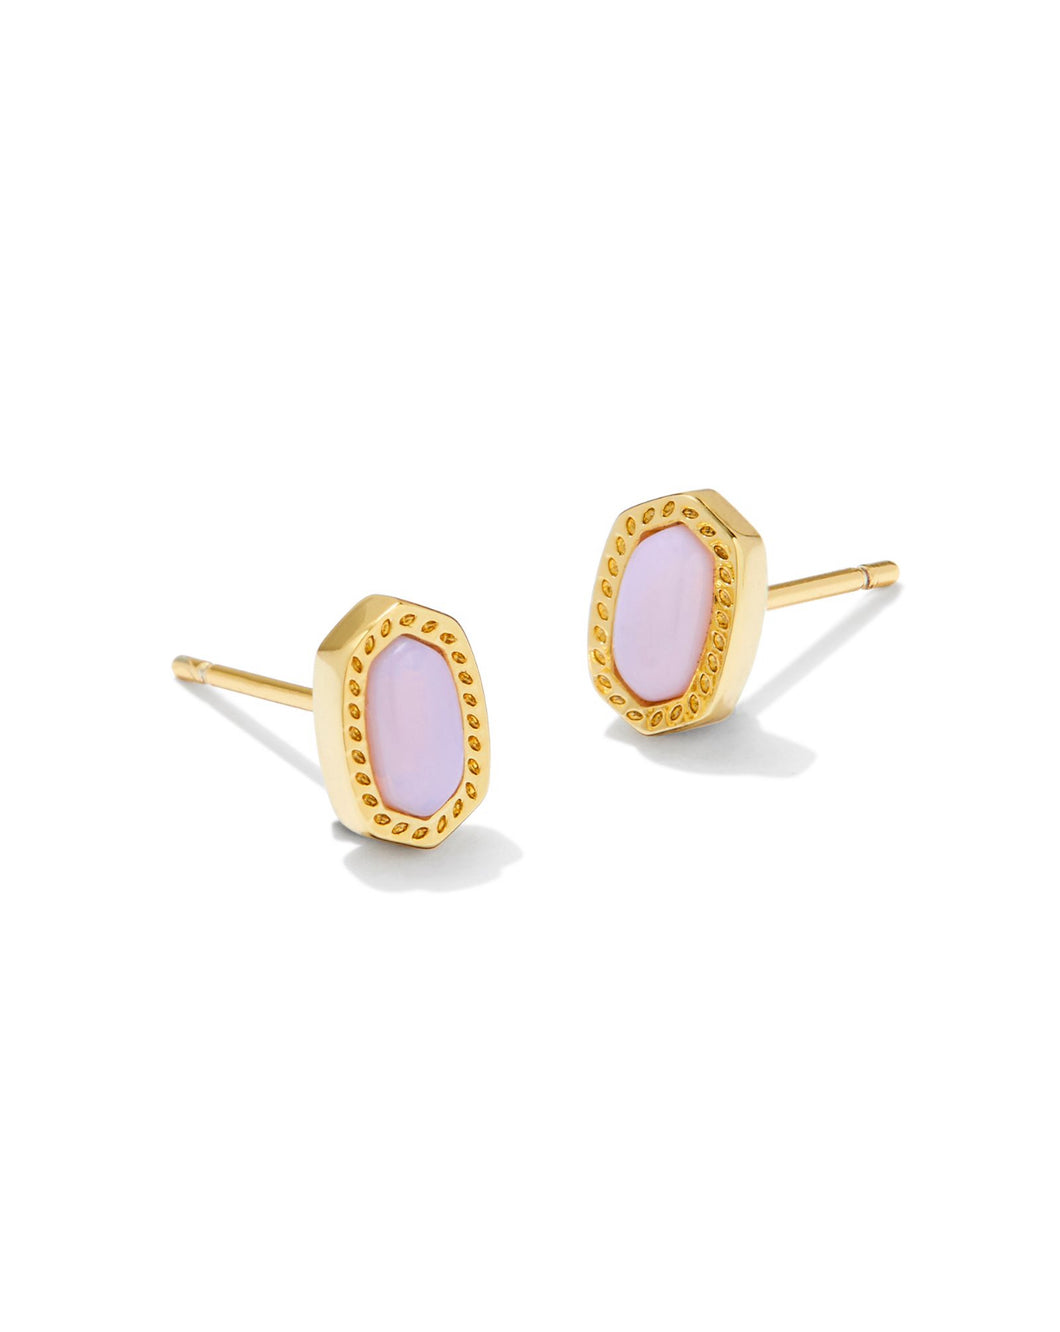 Kendra Scott: Mini Ellie Stud Earrings in Gold Pink Opalite Crystal